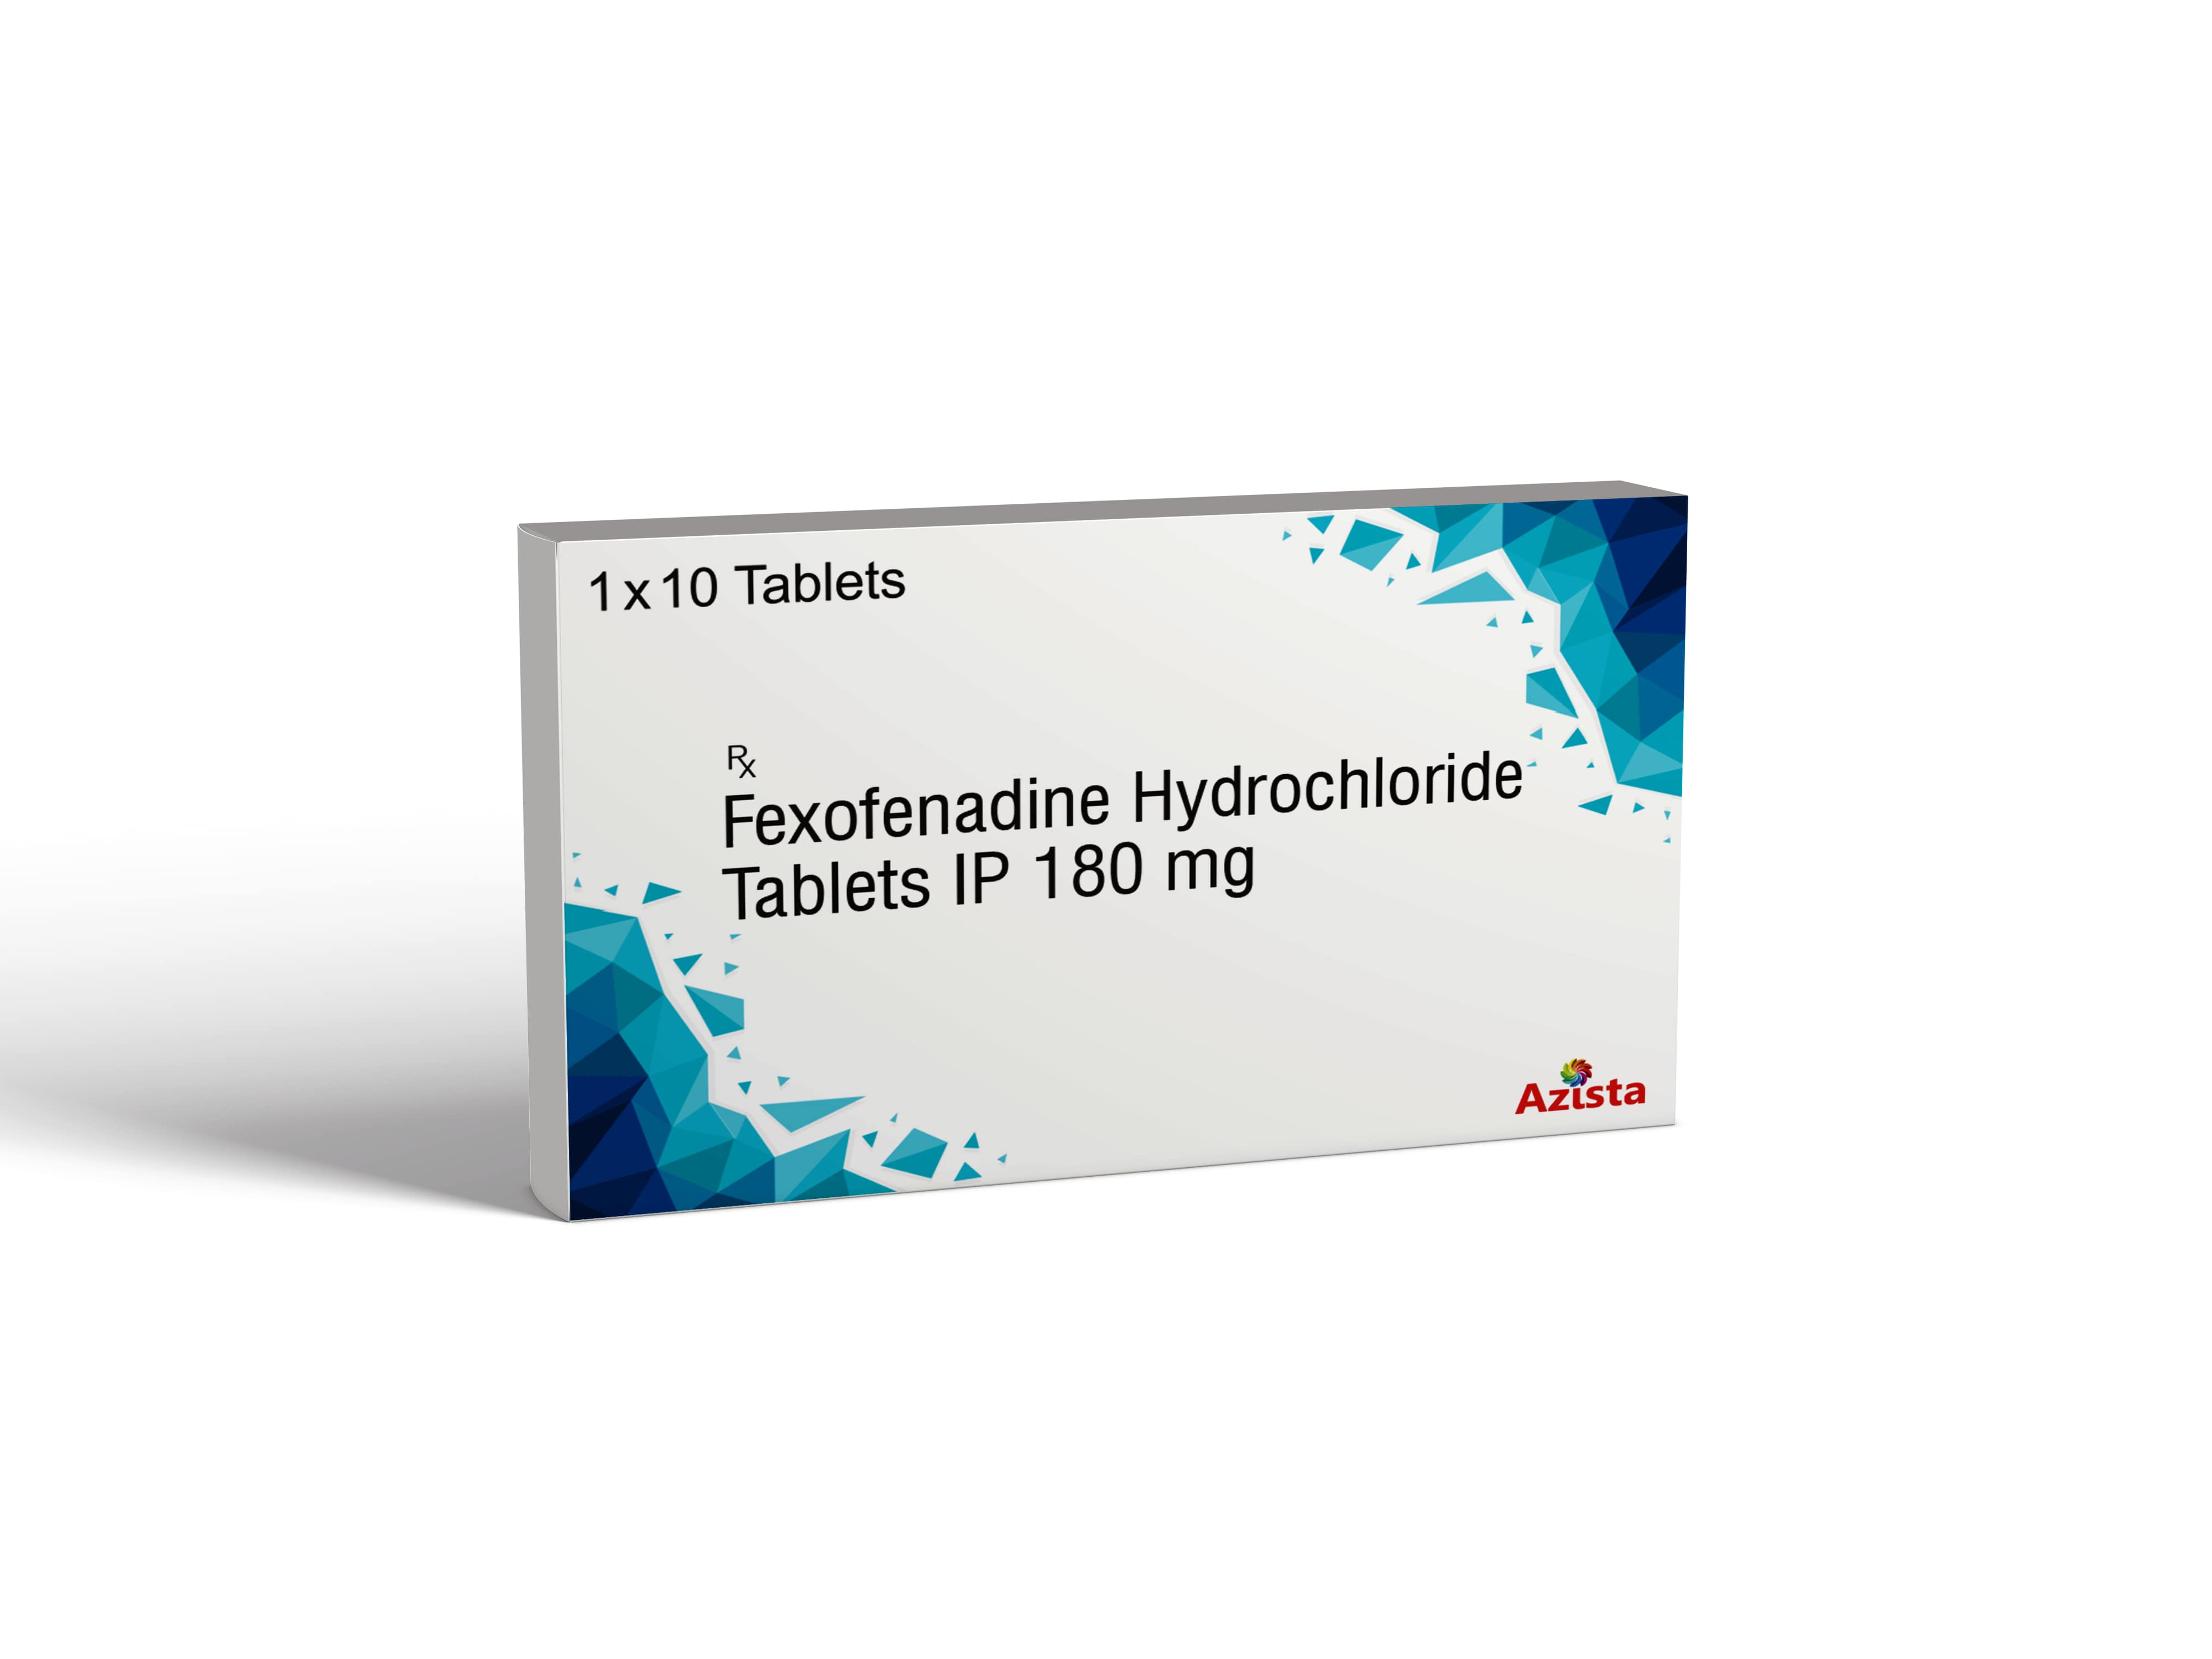 Fexofenadine hydrochloride tablets IP 180mg